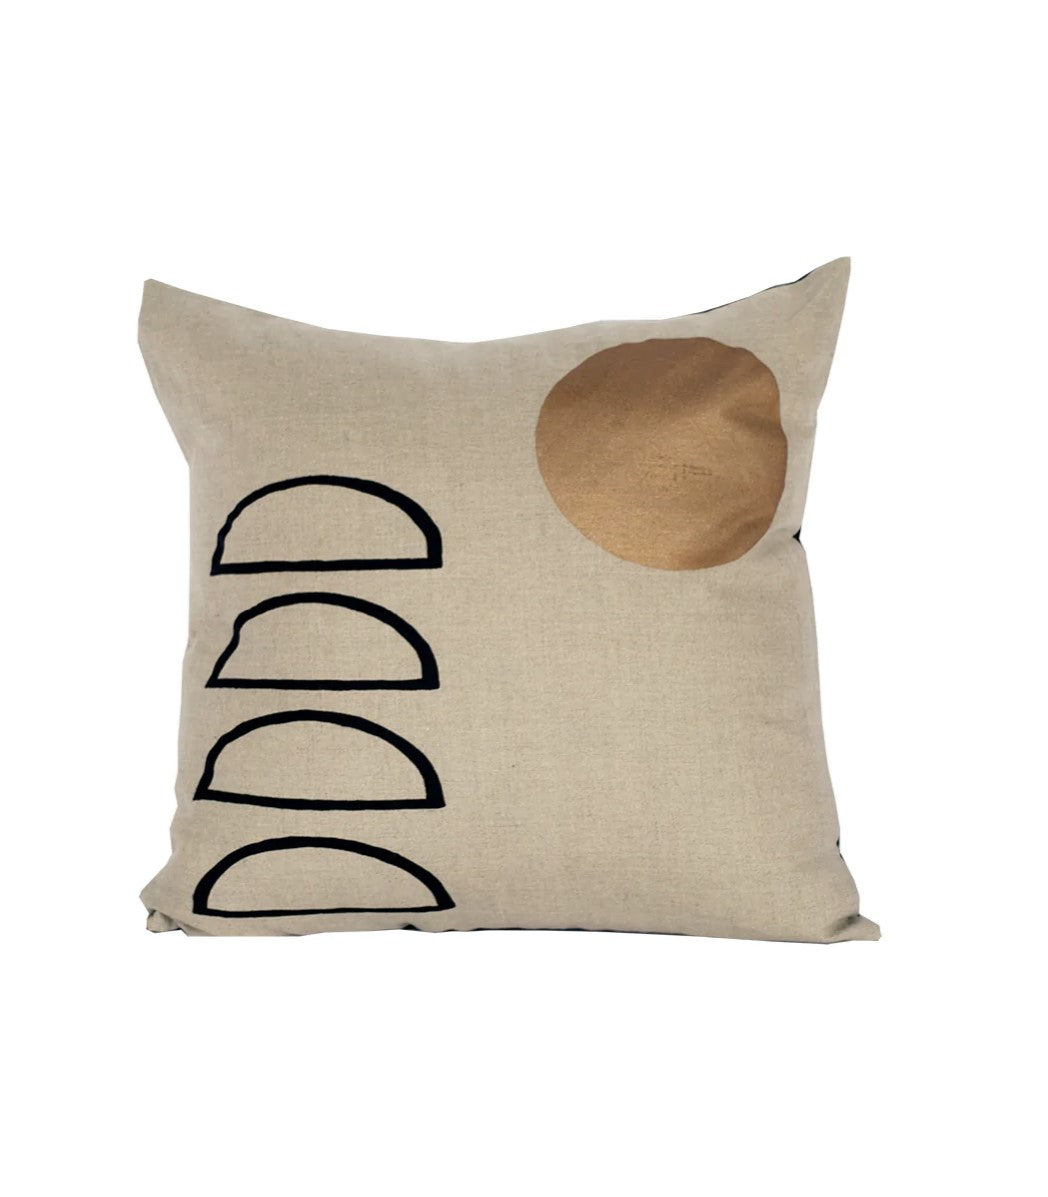 Dibiki-Giizis (Moon) Pillow